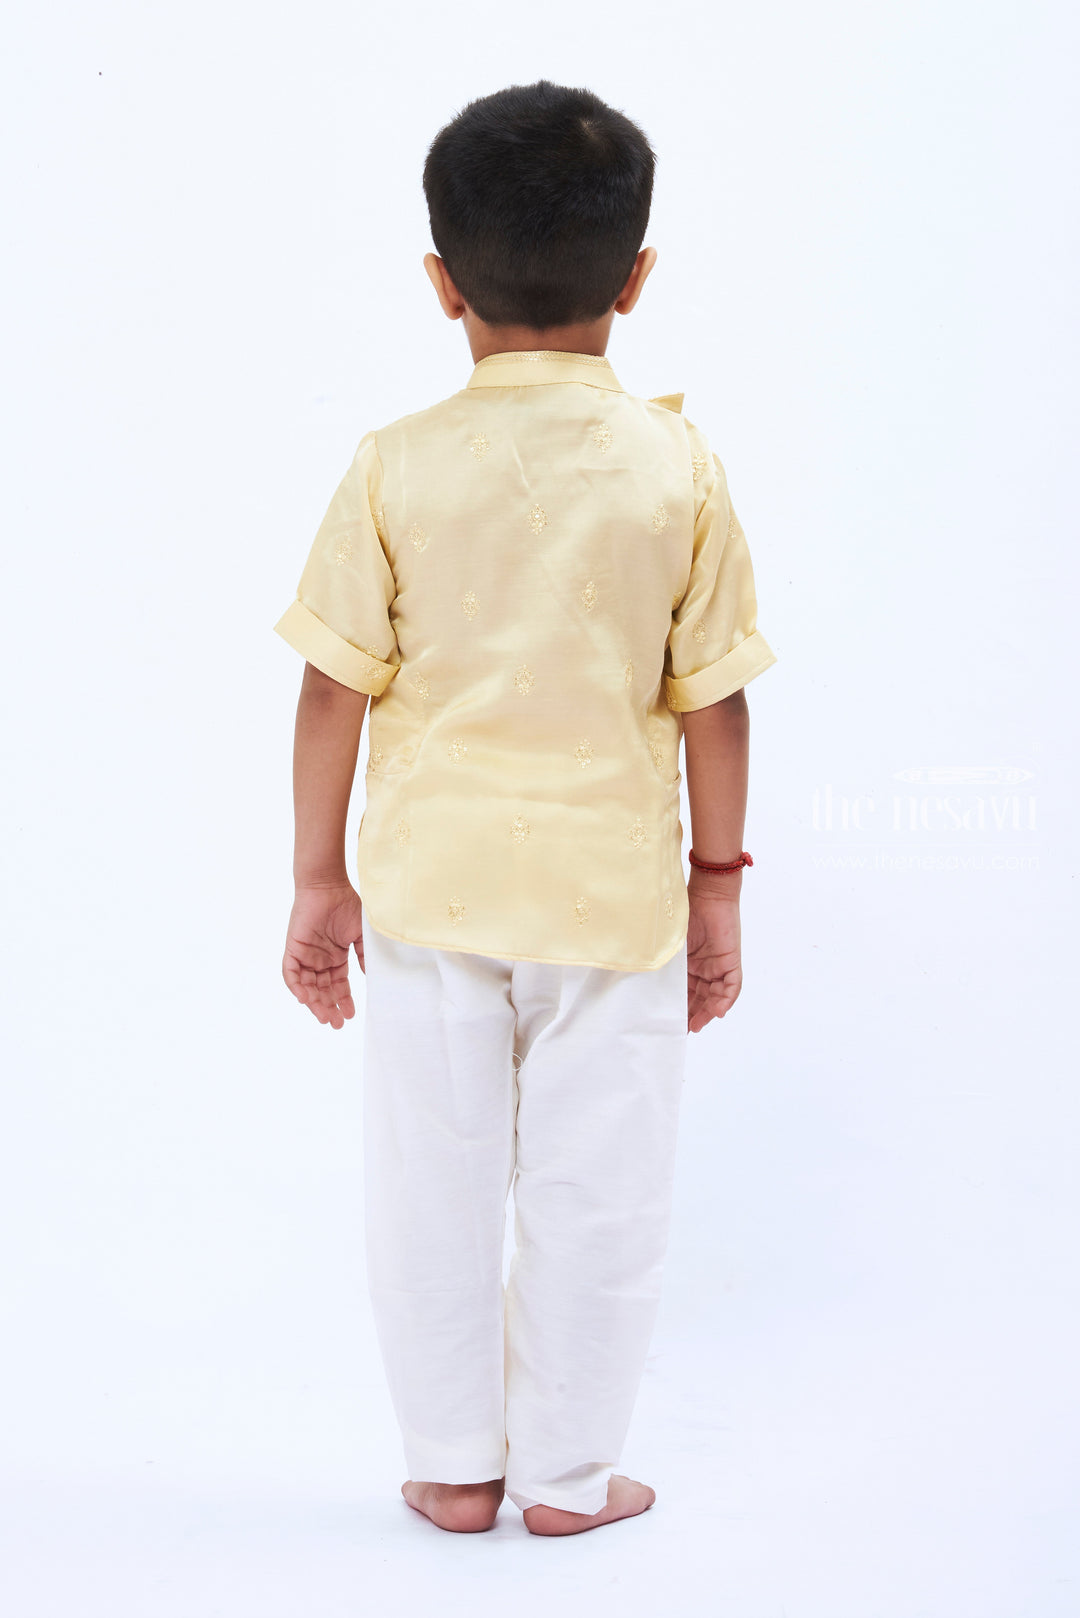 The Nesavu Boys Kurtha Shirt Boys Opulent GoldToned Silk Kurta Shirt with Embroidery Nesavu Boys Silk Embroidered Kurta Shirt | Festive Gold Toned Attire for Kids | The Nesavu